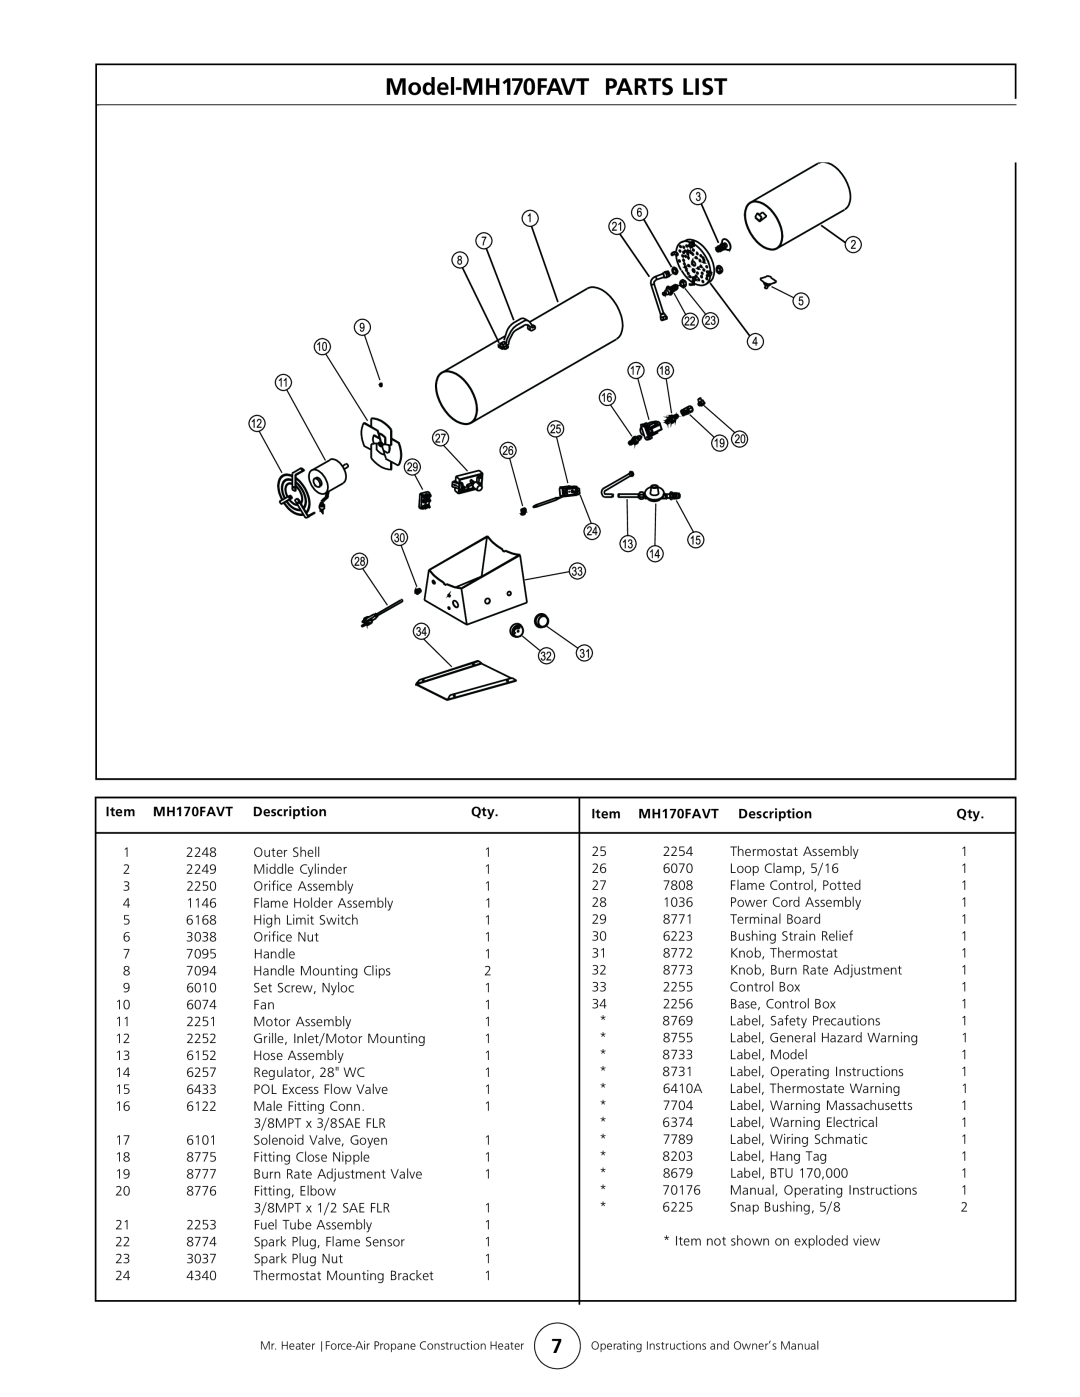 Enerco owner manual Model-MH170FAVTPARTS LIST, Description 